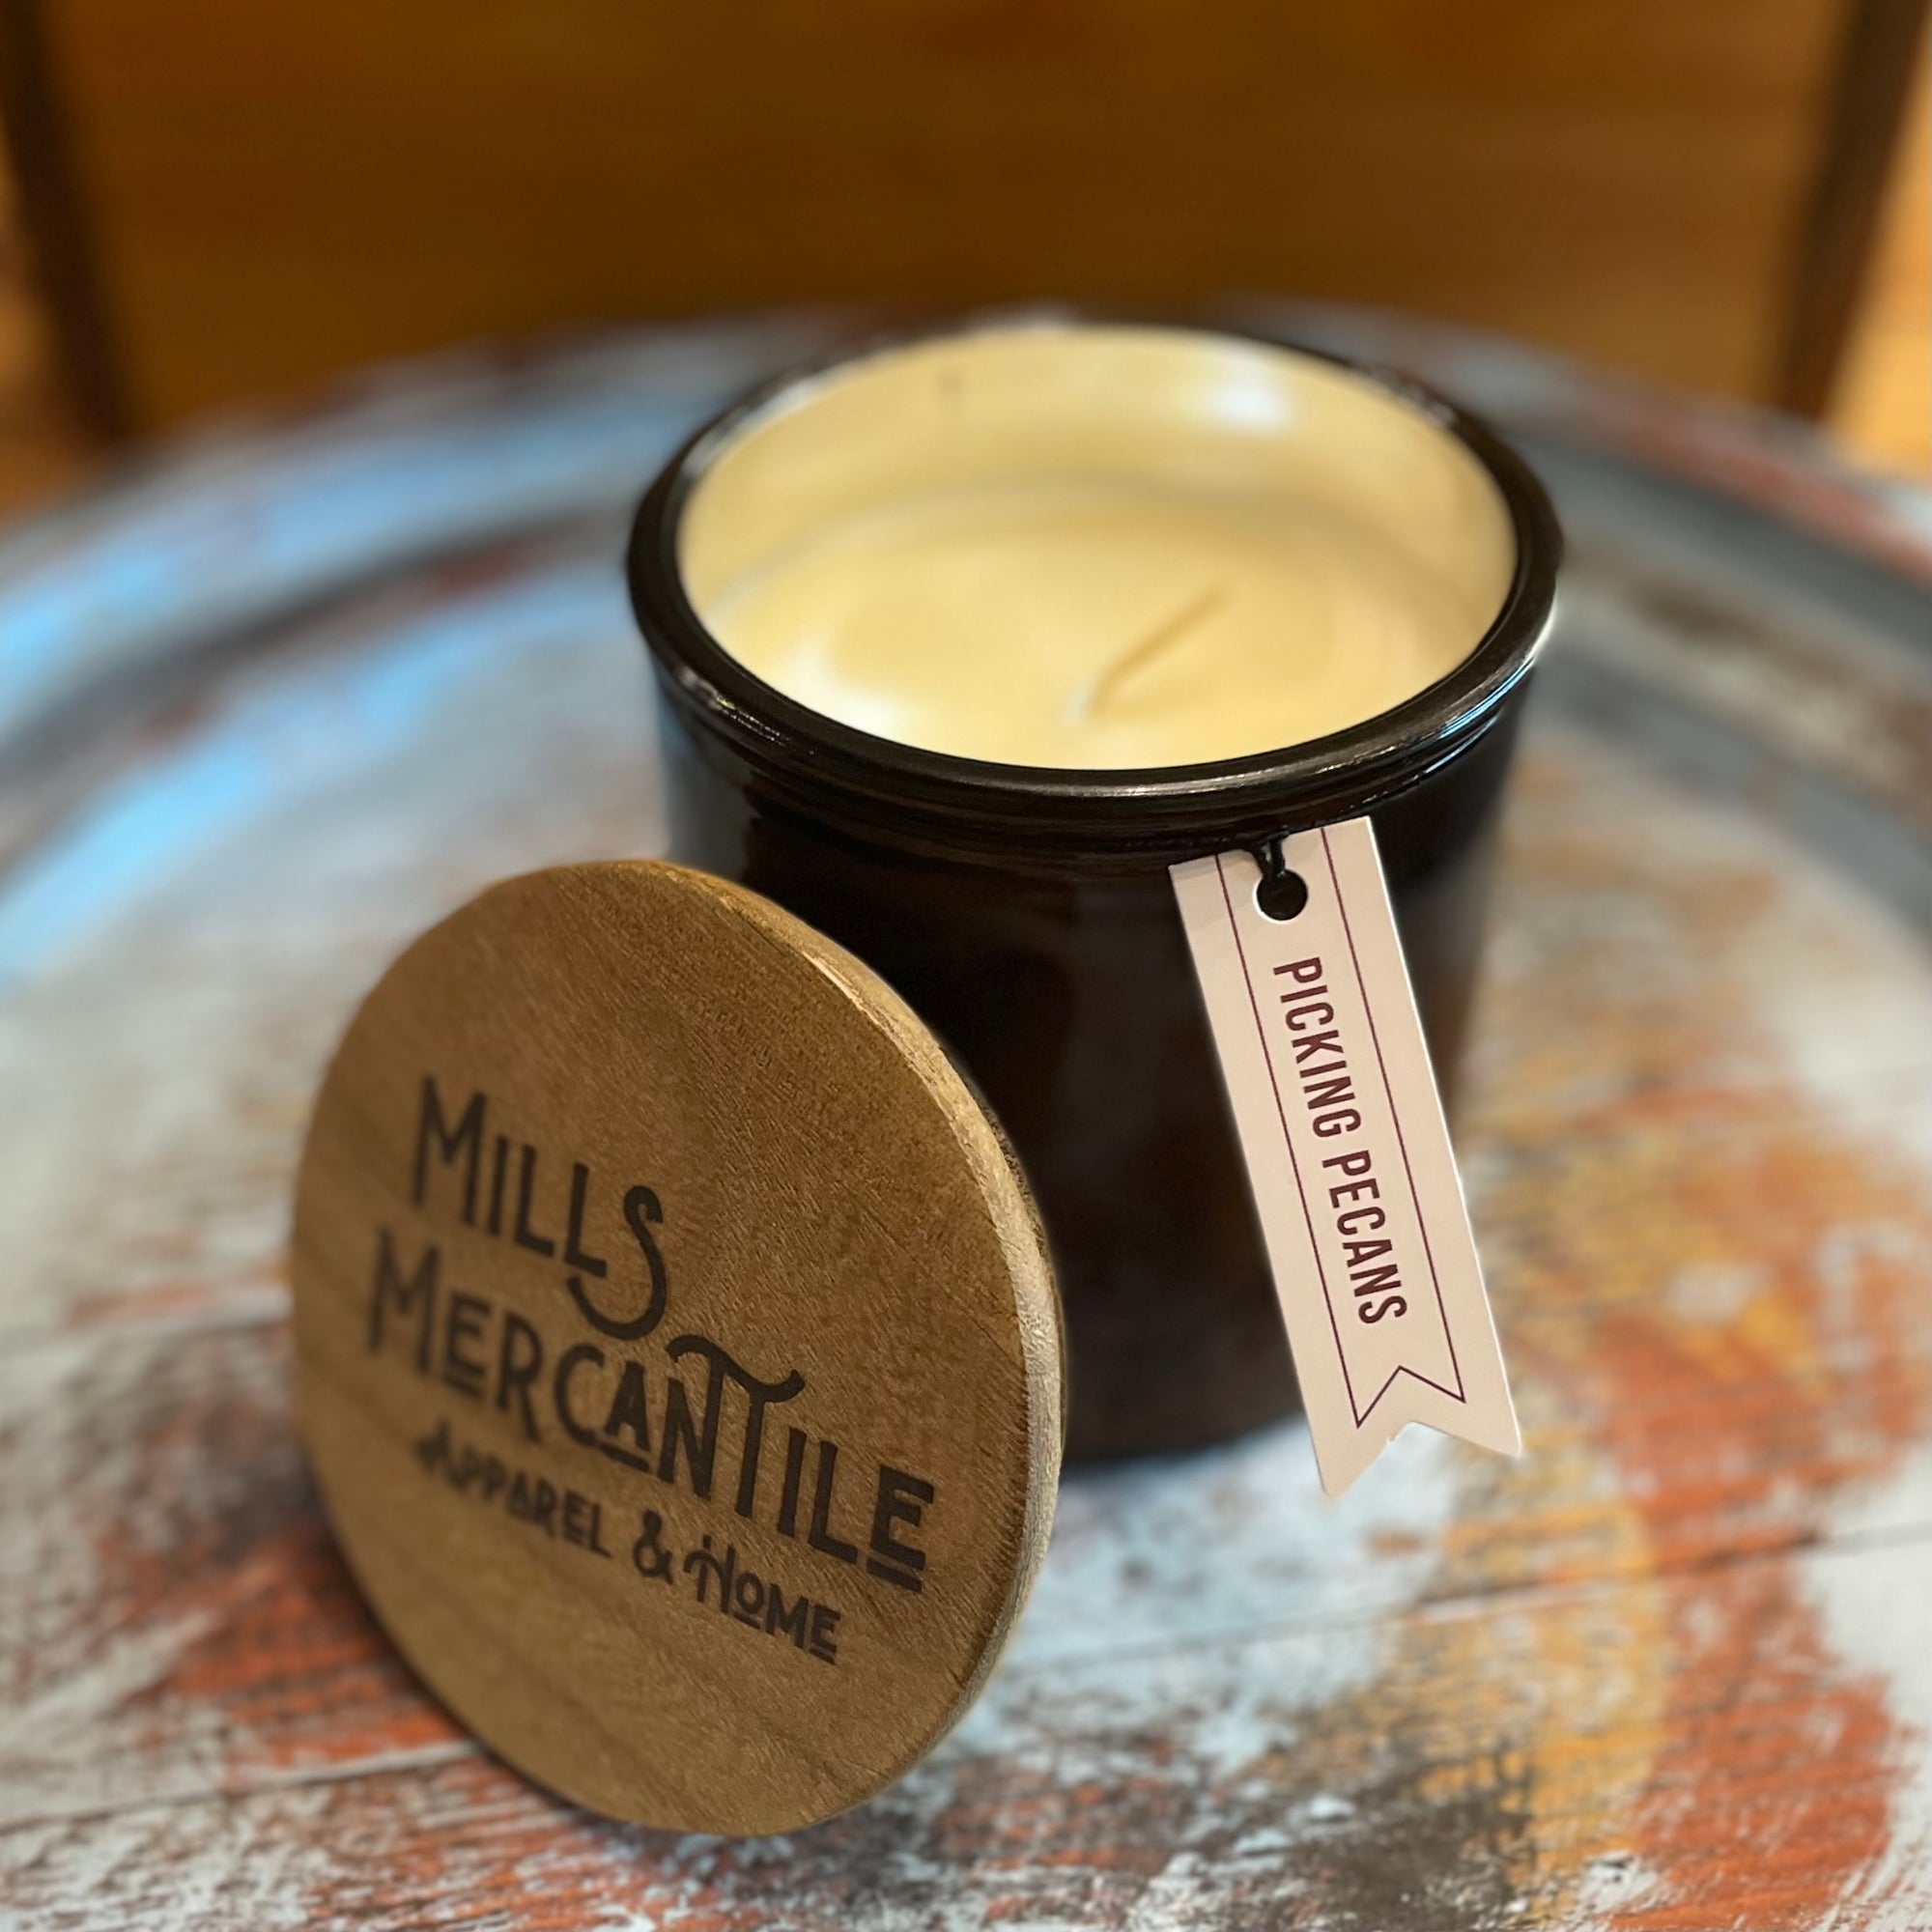 Mills Mercantile Candle - Picking Pecans